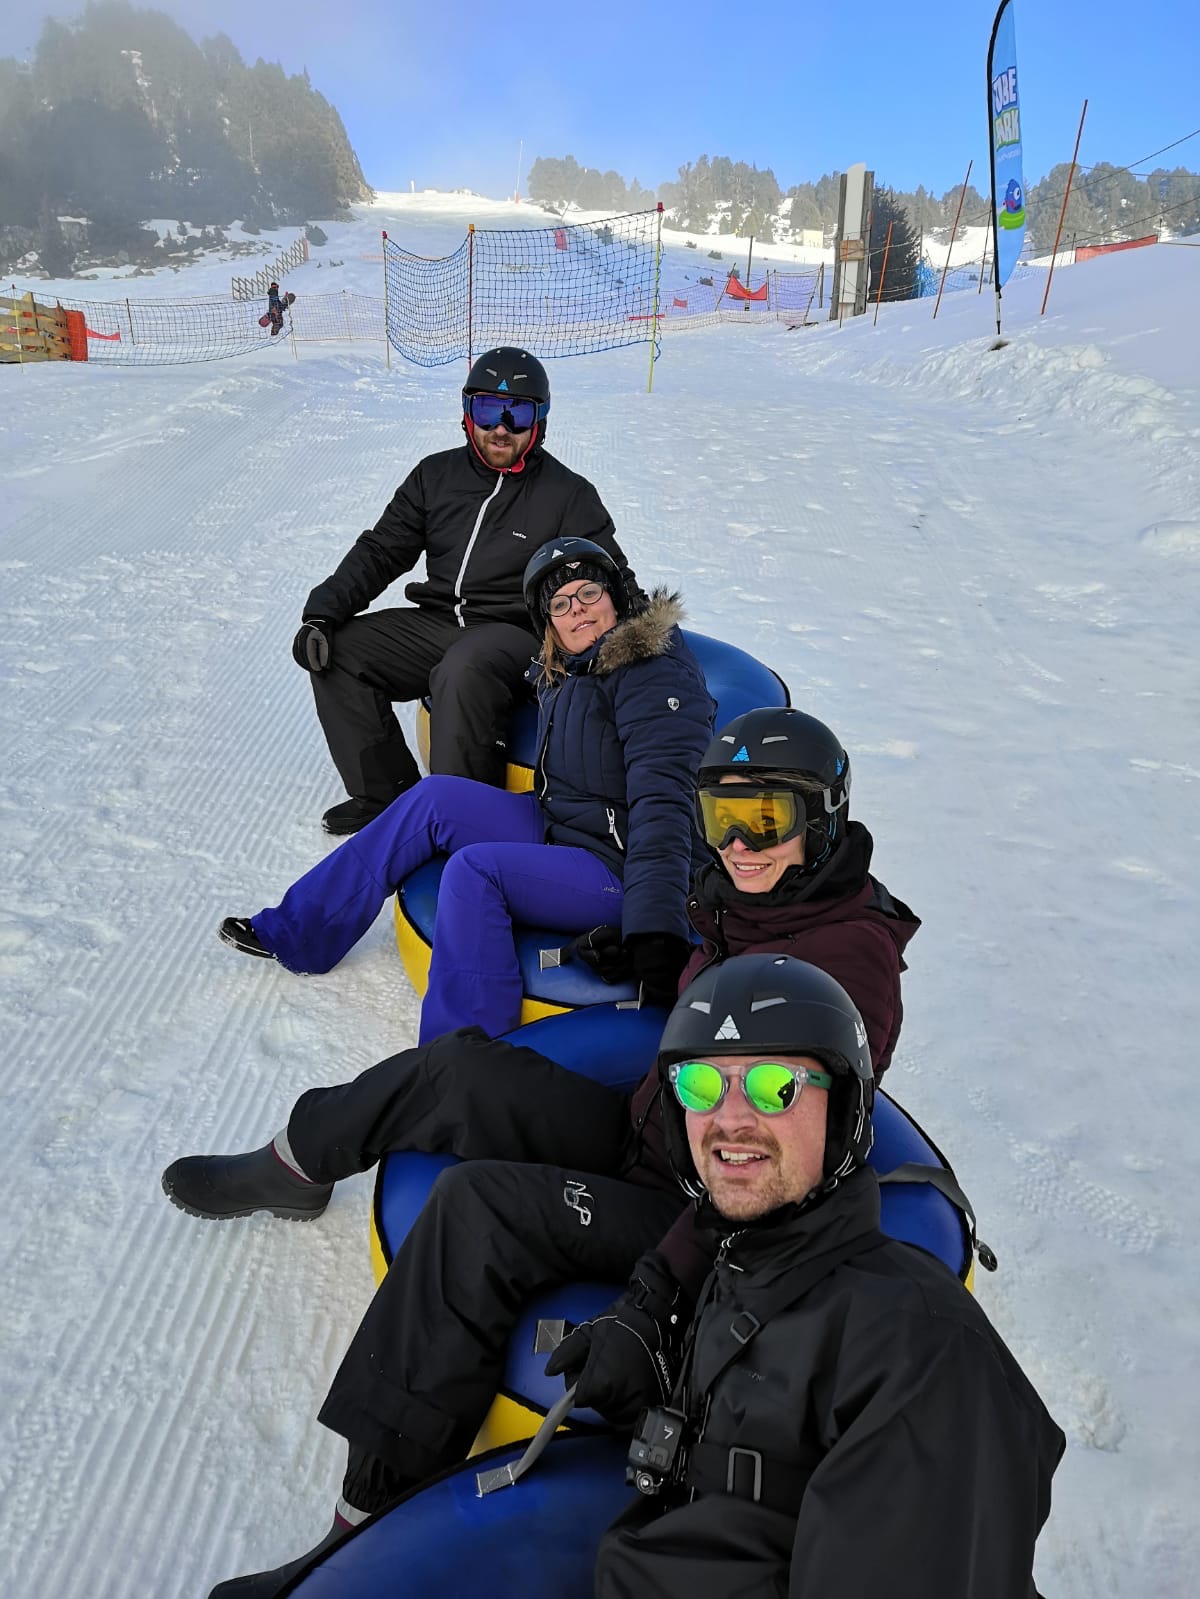 Chamrousse blog experience snowtubing tube park mountain ski resort isere french alps france - © AB